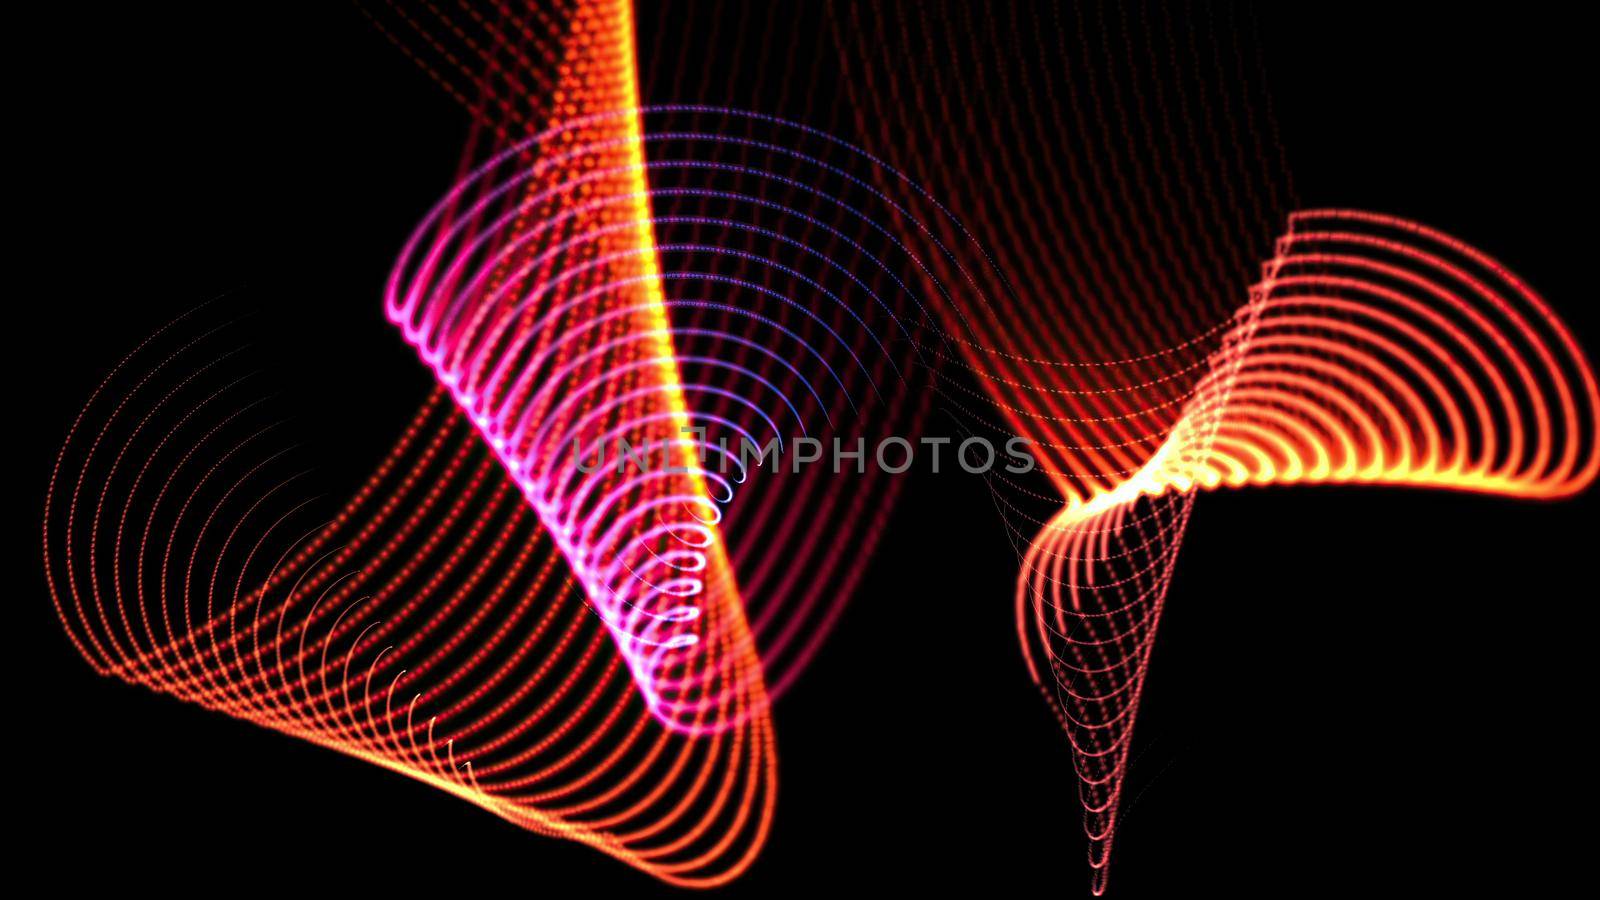 3d illustration - Hypnotic grid of lines creates geometric patterns. Computer graphics by vitanovski